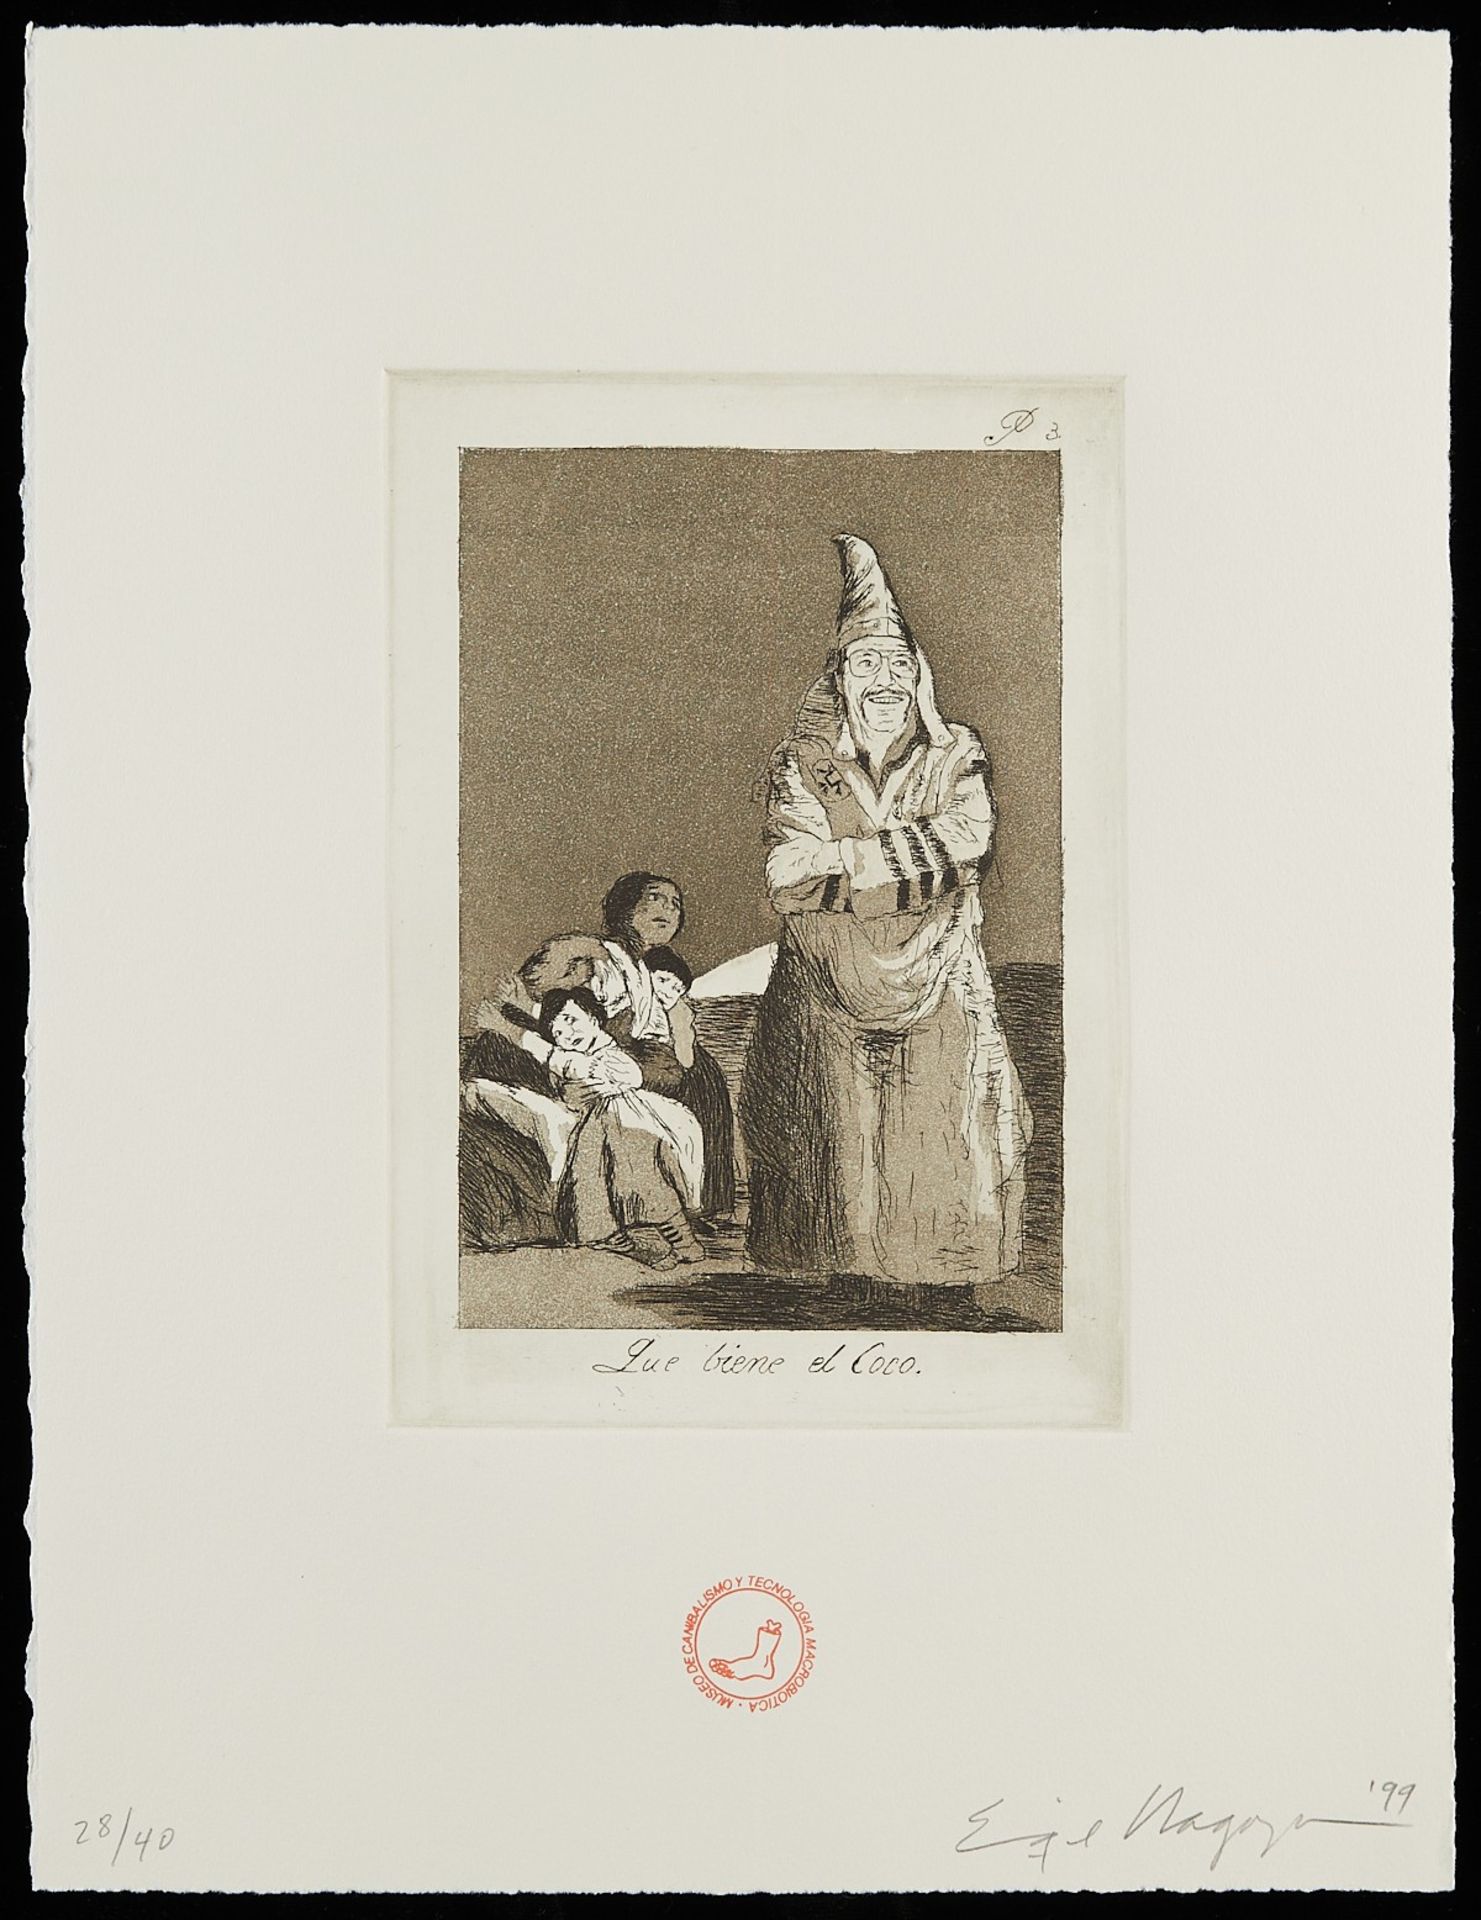 Grp: 8 Chagoya "Return To Goya's Caprichos" Suite - Image 26 of 40